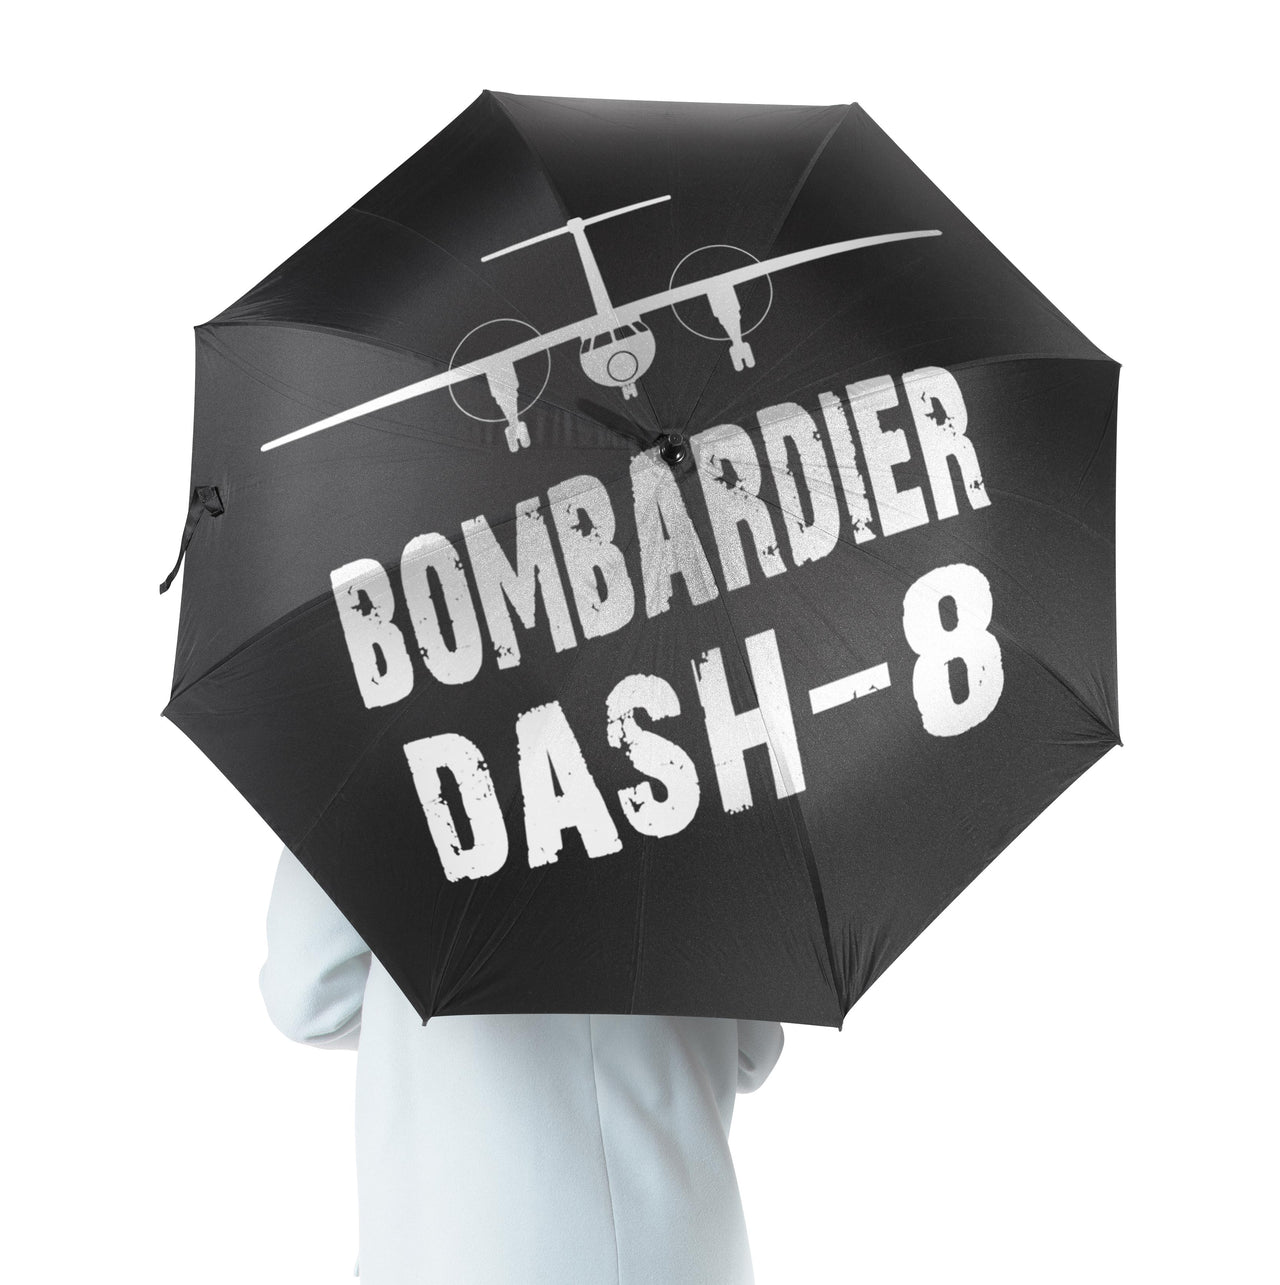 Bombardier Dash-8 & Plane Designed Umbrella